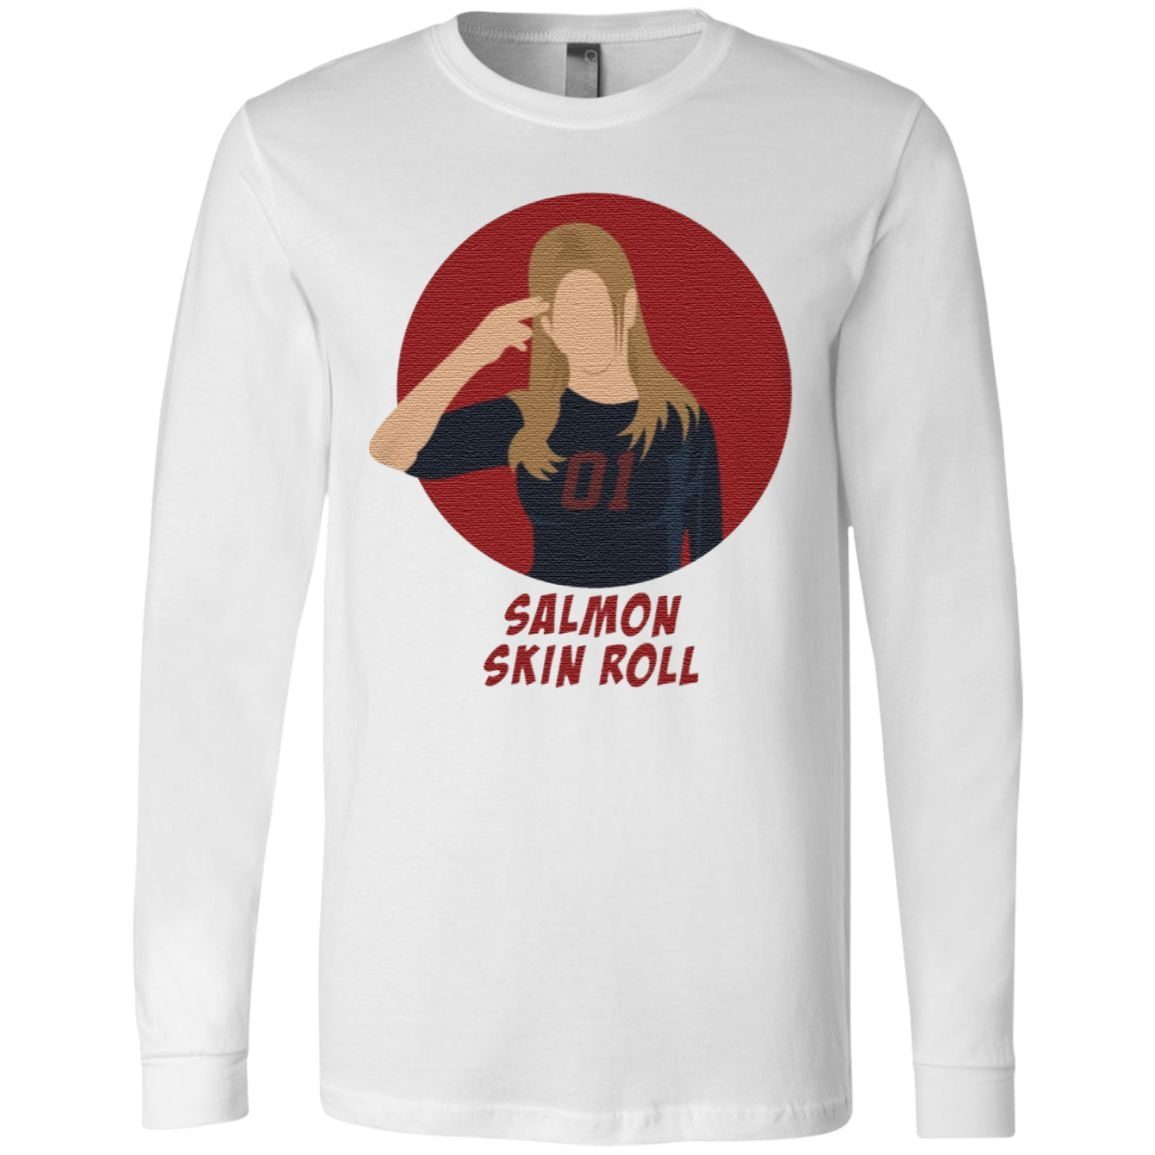 Rachel Salmon Skin Roll T Shirt